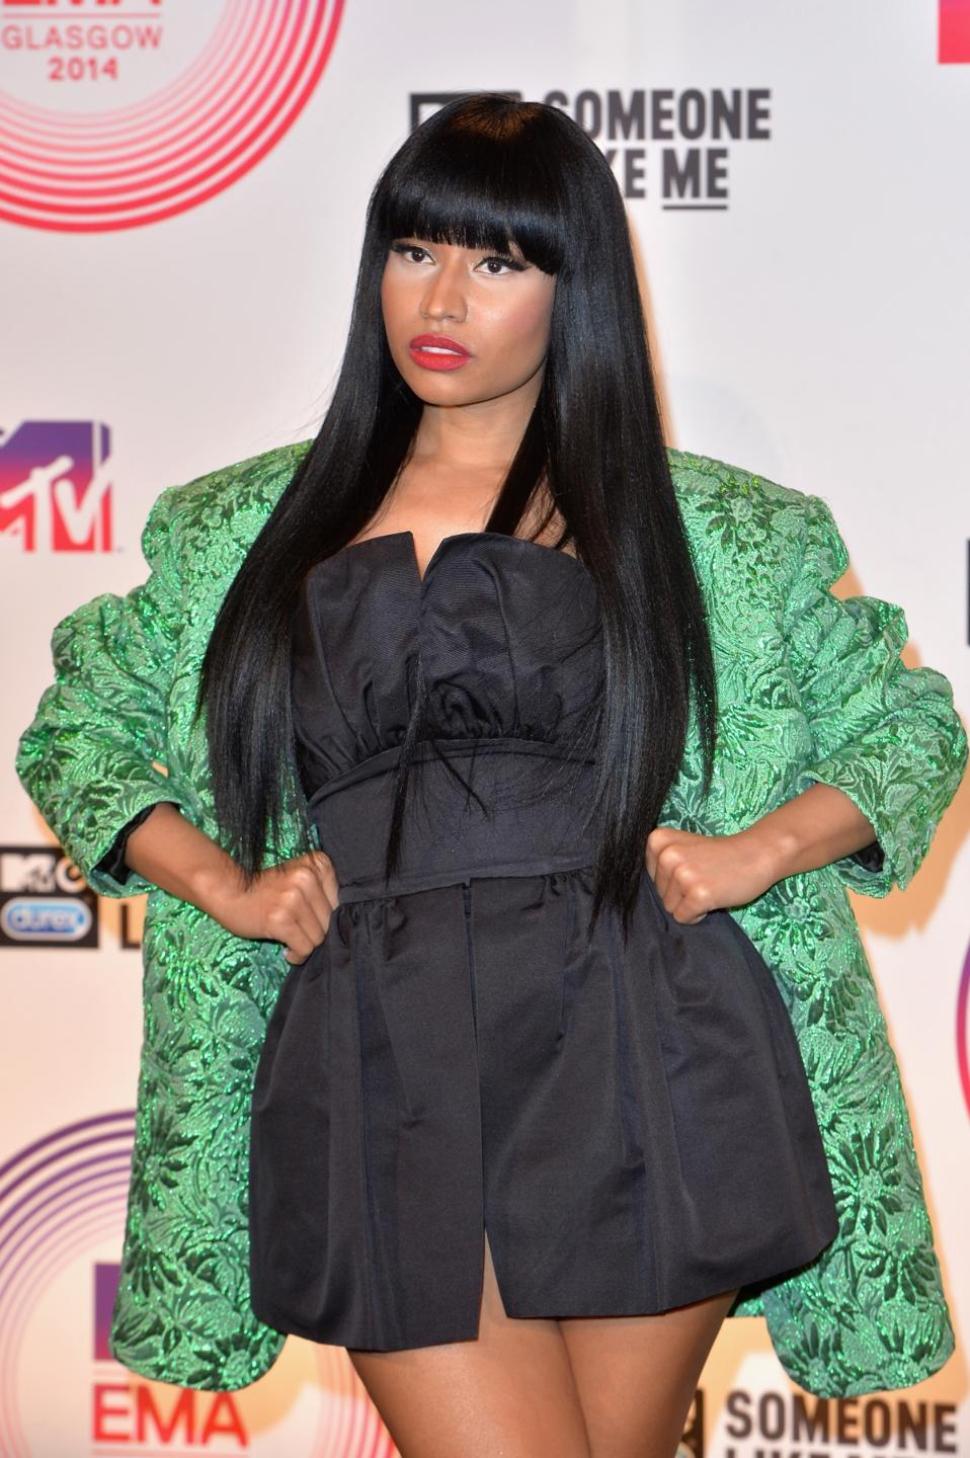 Nicki Minaj apologized for Nazi-themed imagery on her video.